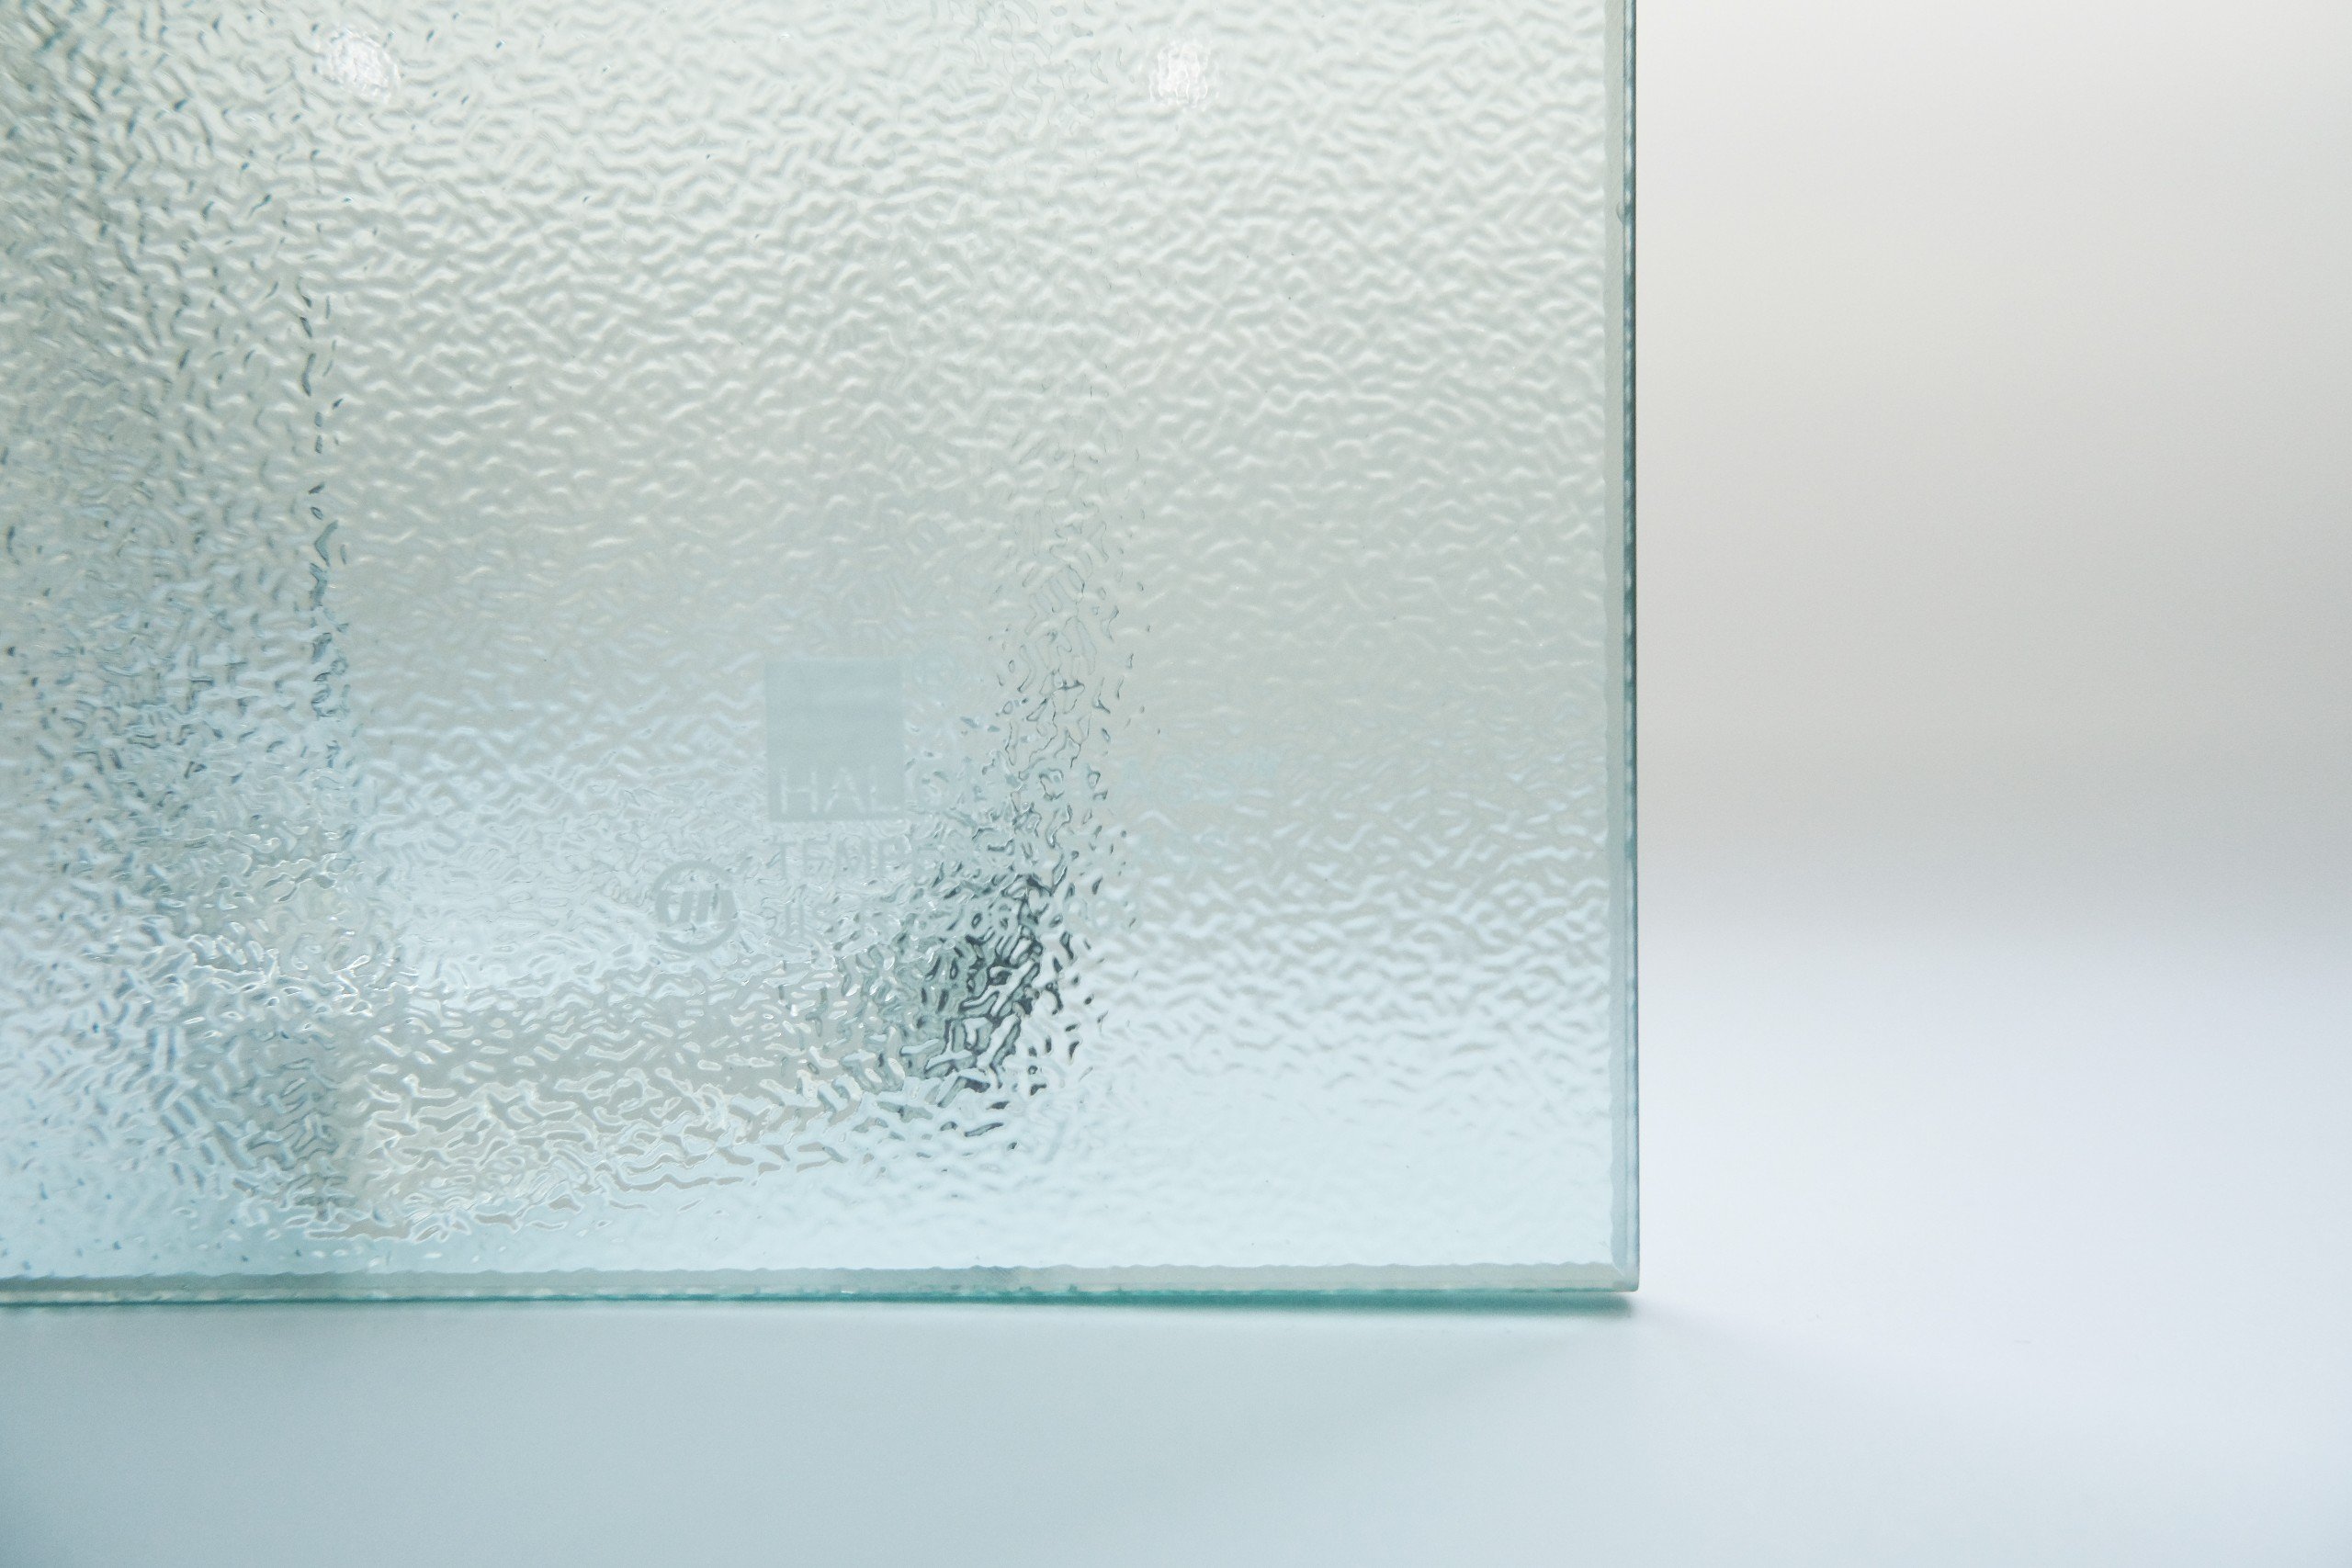 Patterned glass